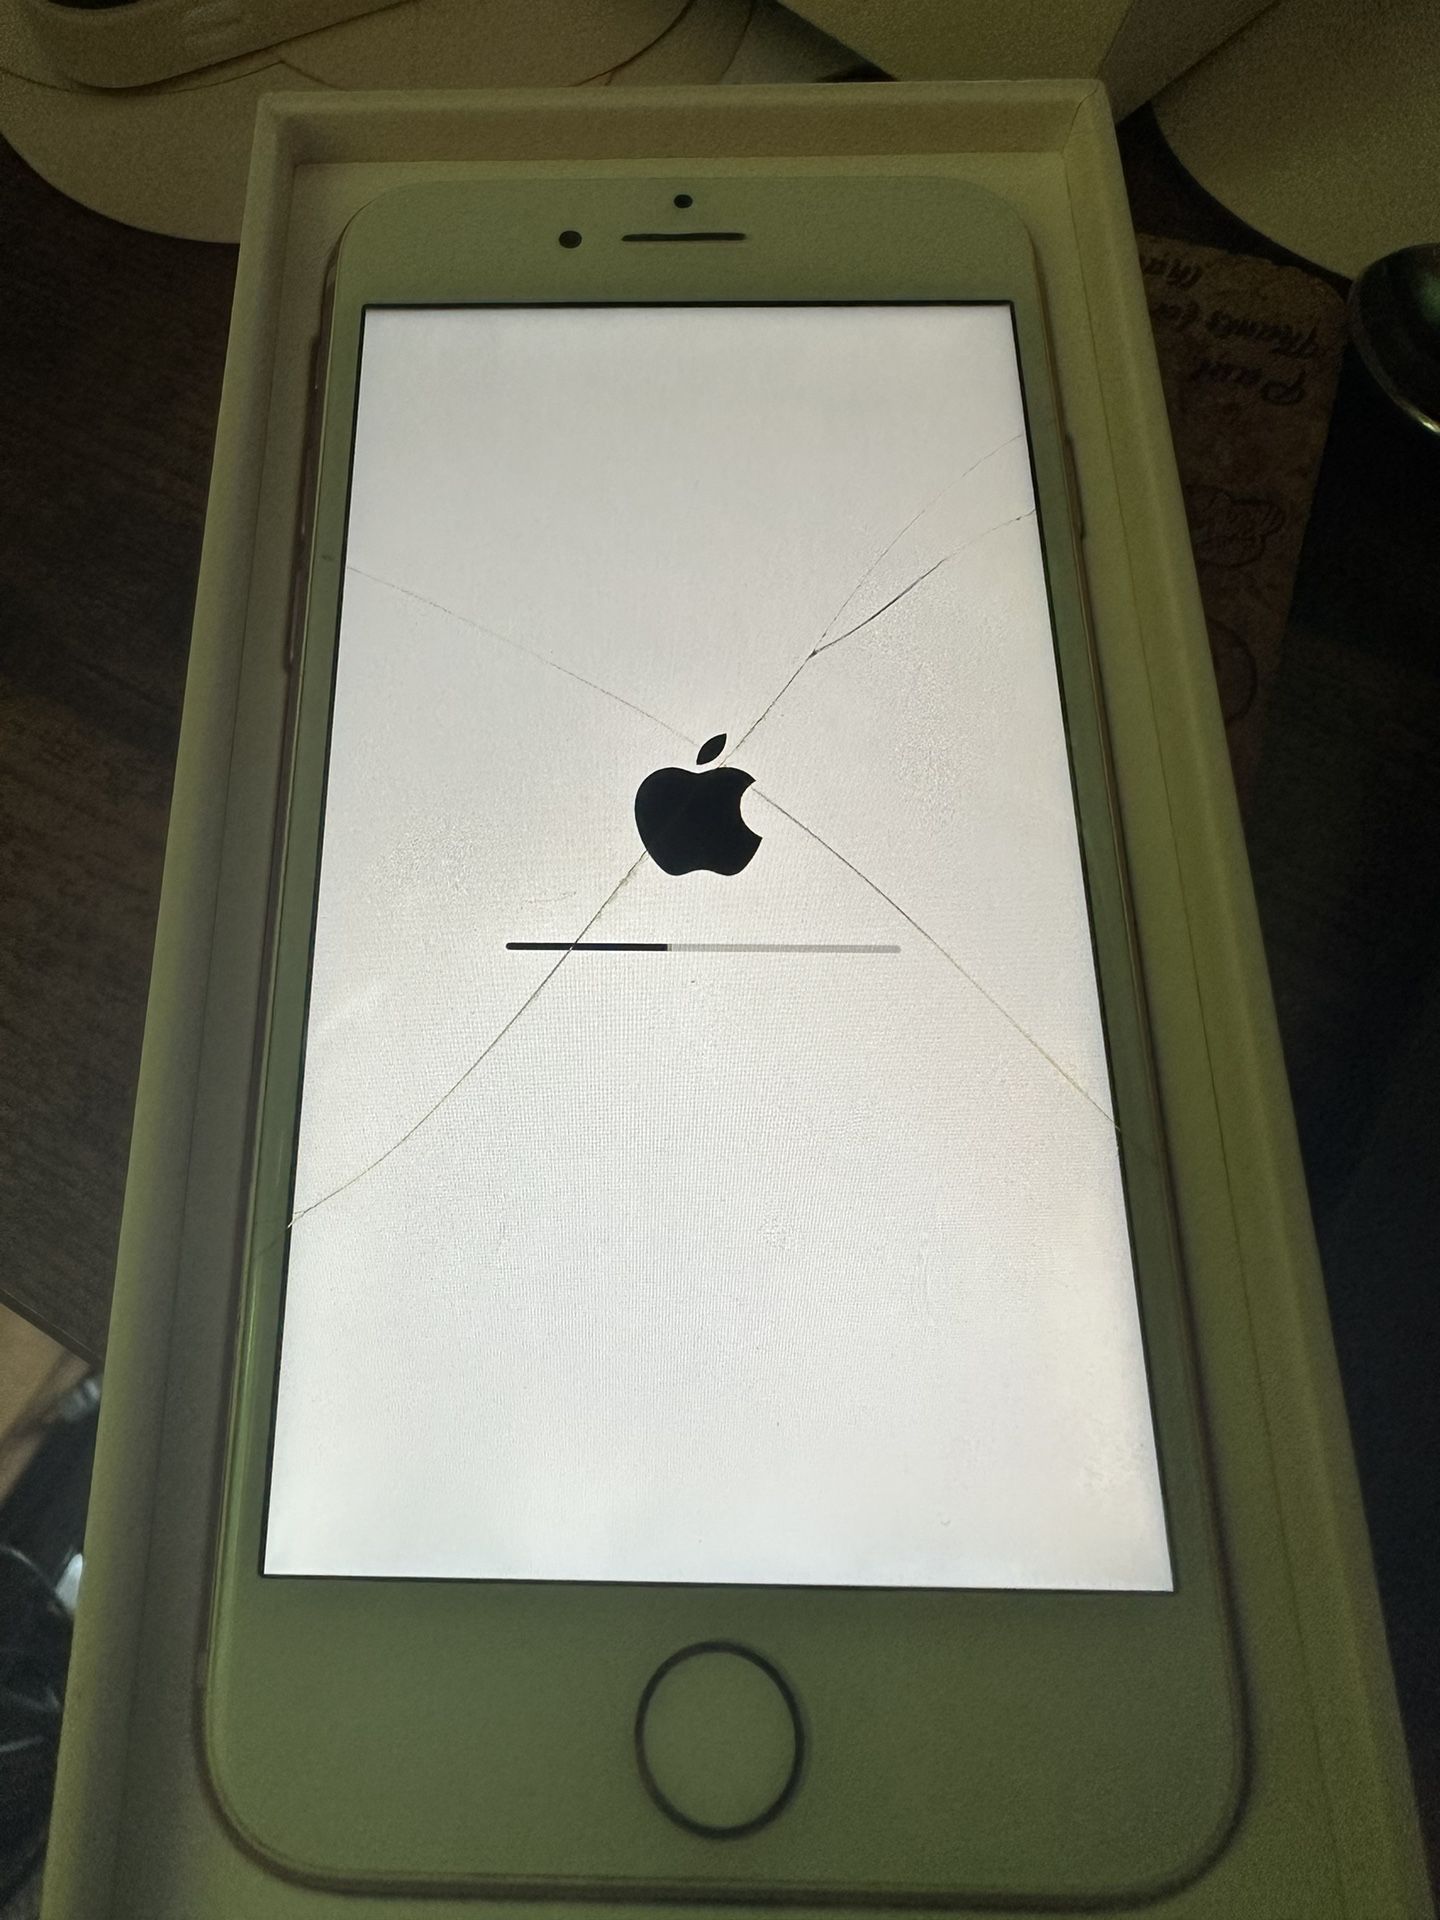 iPhone 8 64GB cracked screen